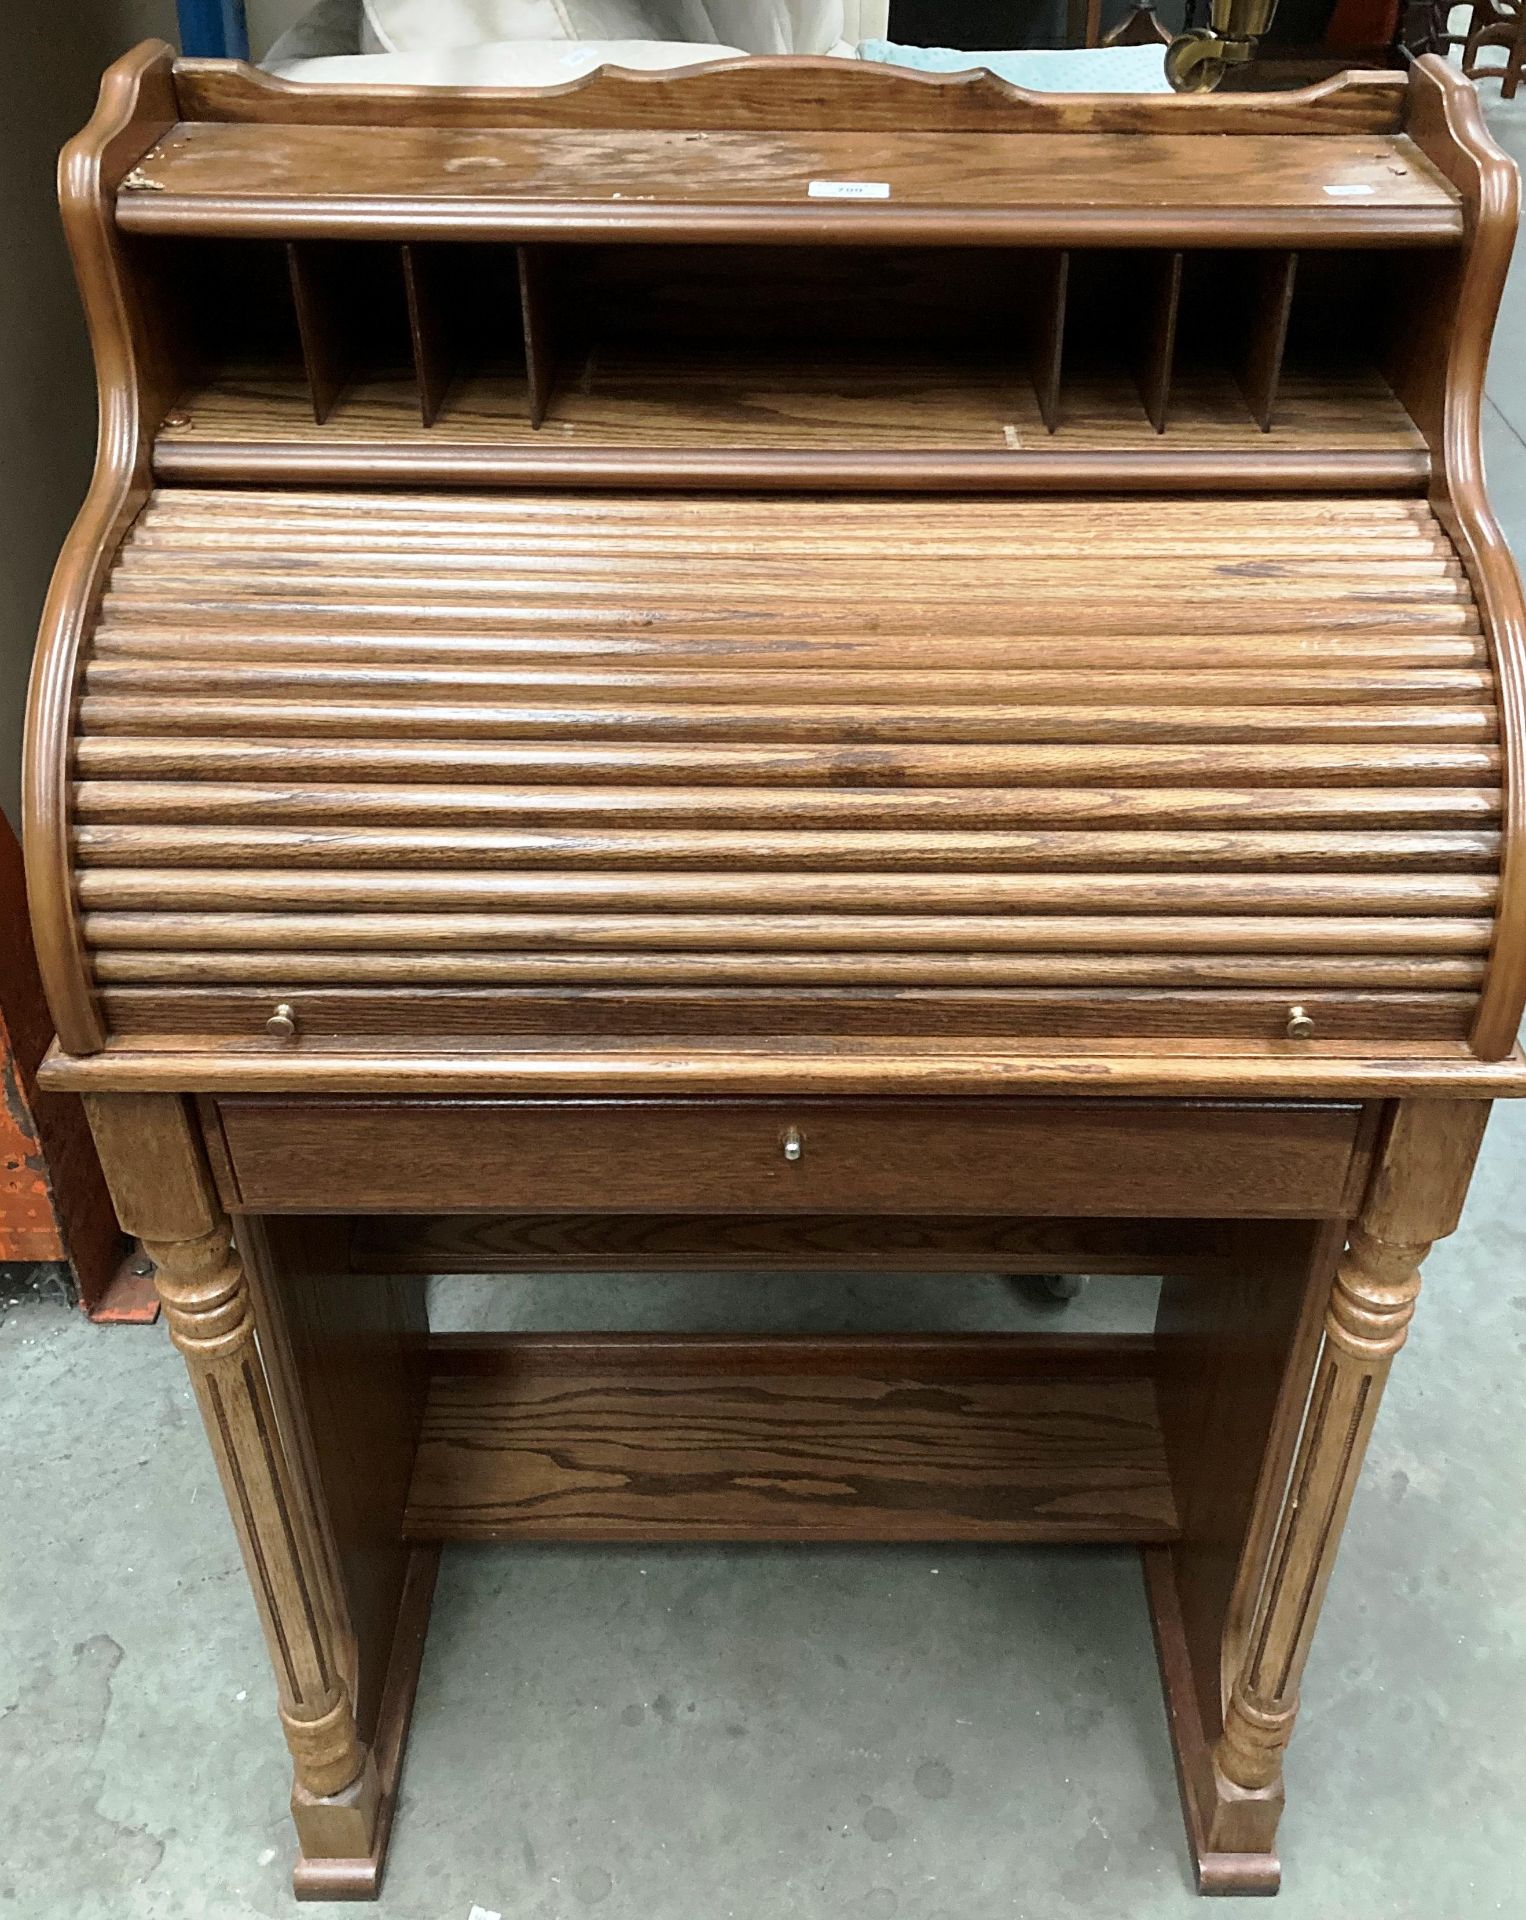 A small light oak single drawer roll top desk 68cm x 110cm high